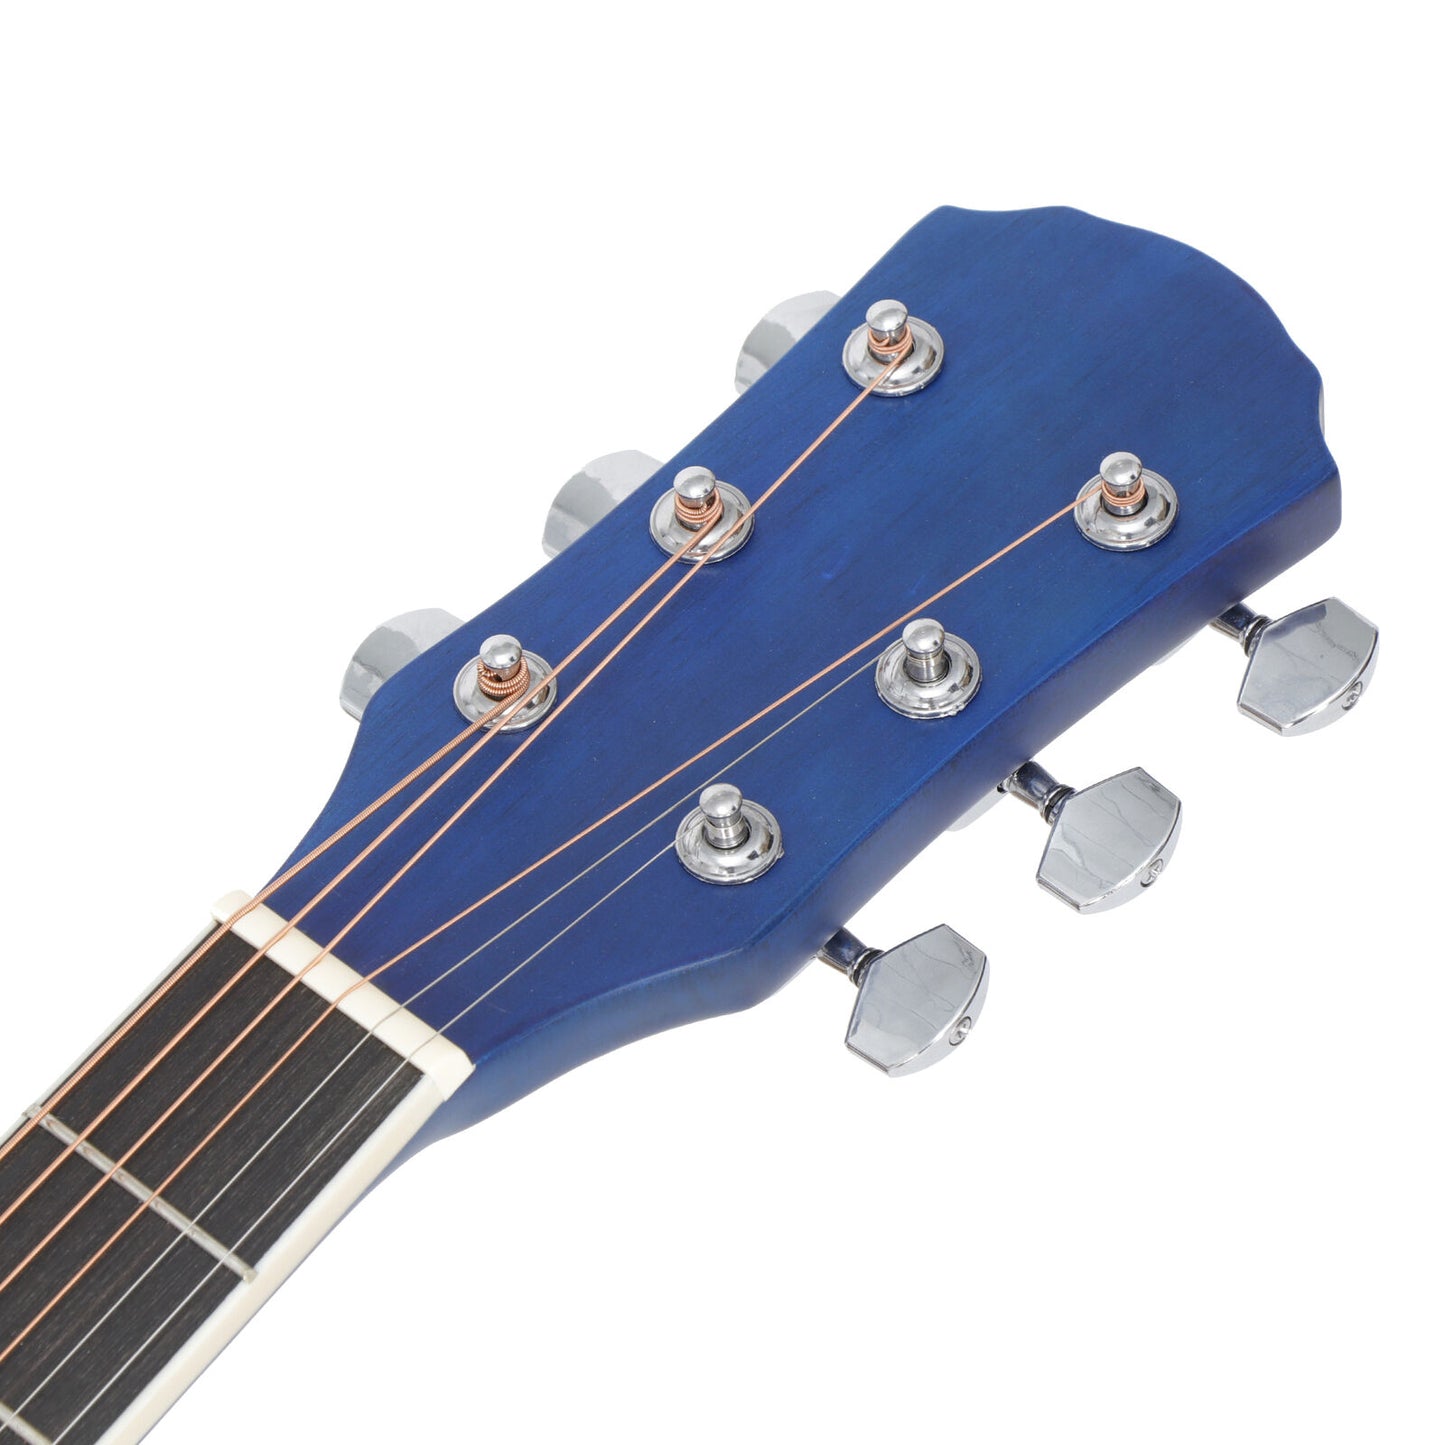 41" Full Size Beginner Acoustic Cutaway Guitar w/Case Strap Capo Strings Blue